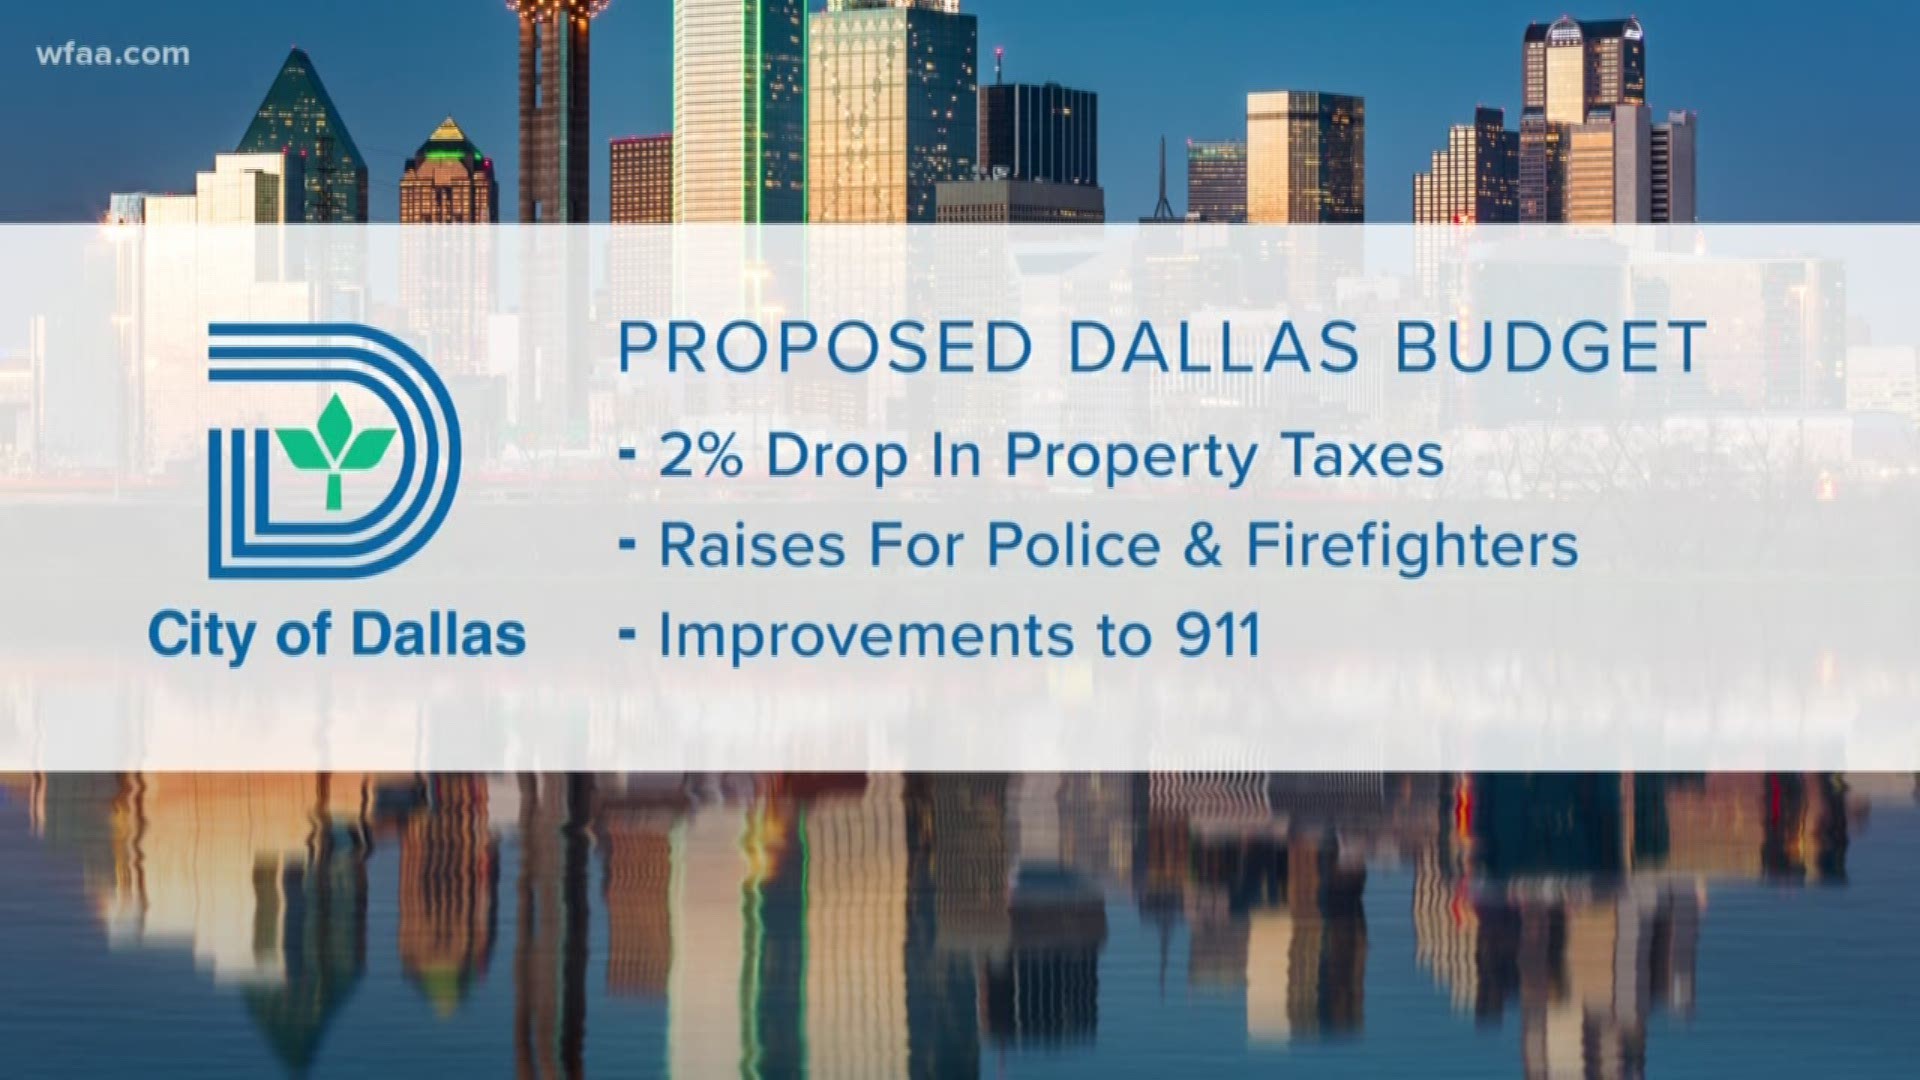 Dallas budget includes property tax cut